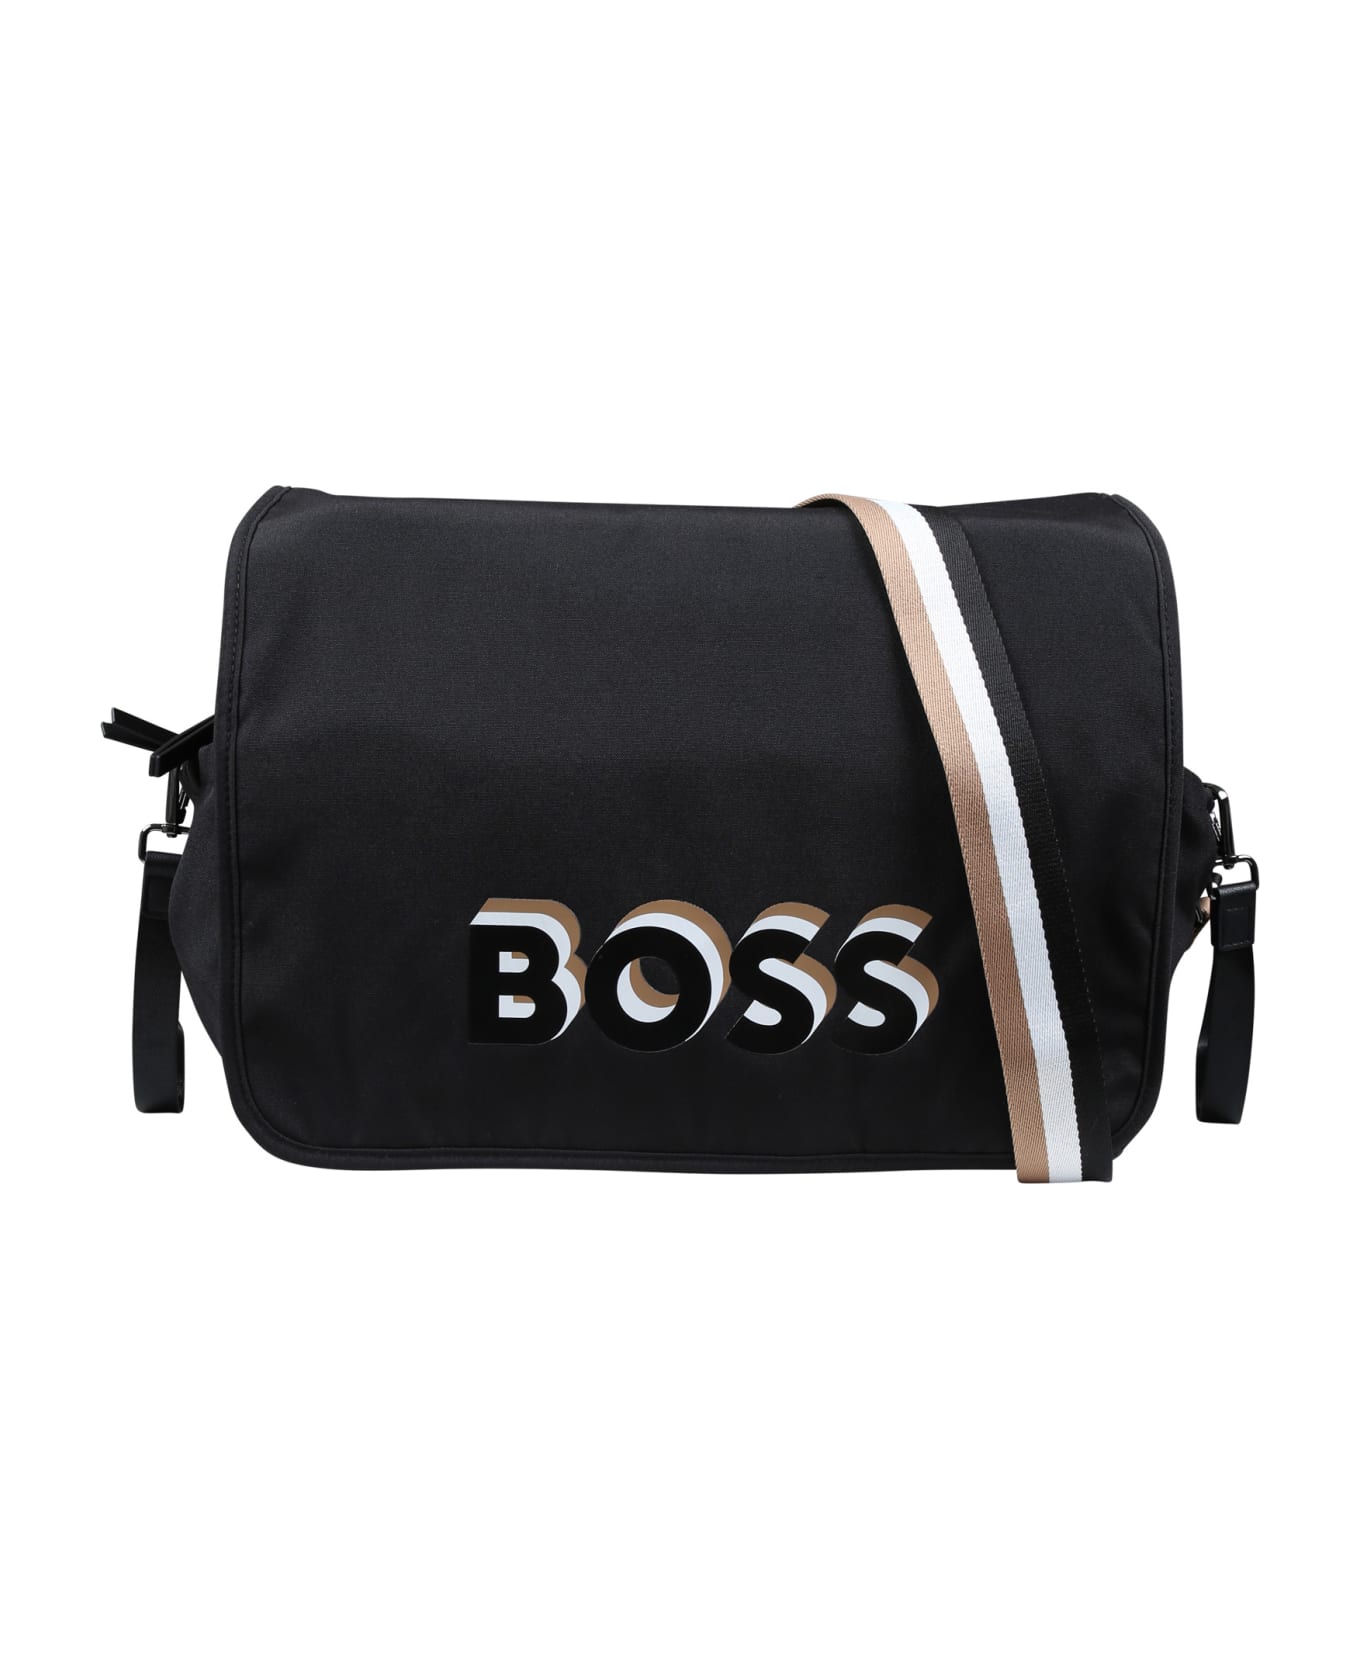 Hugo Boss Black Mother Bag For Baby Boy With Logo - Black